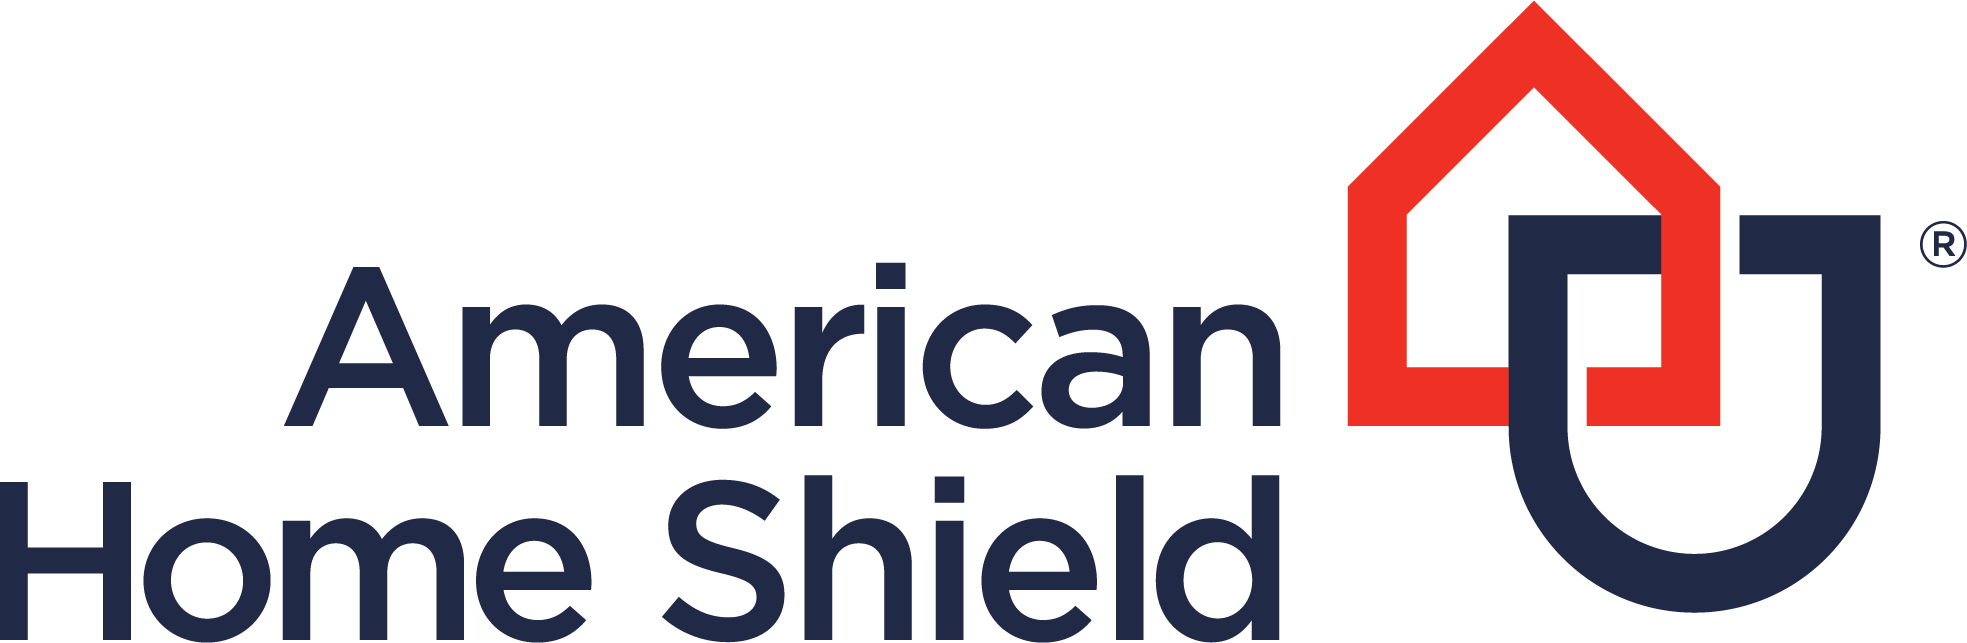 47 Minimalist American home shield freon cost 